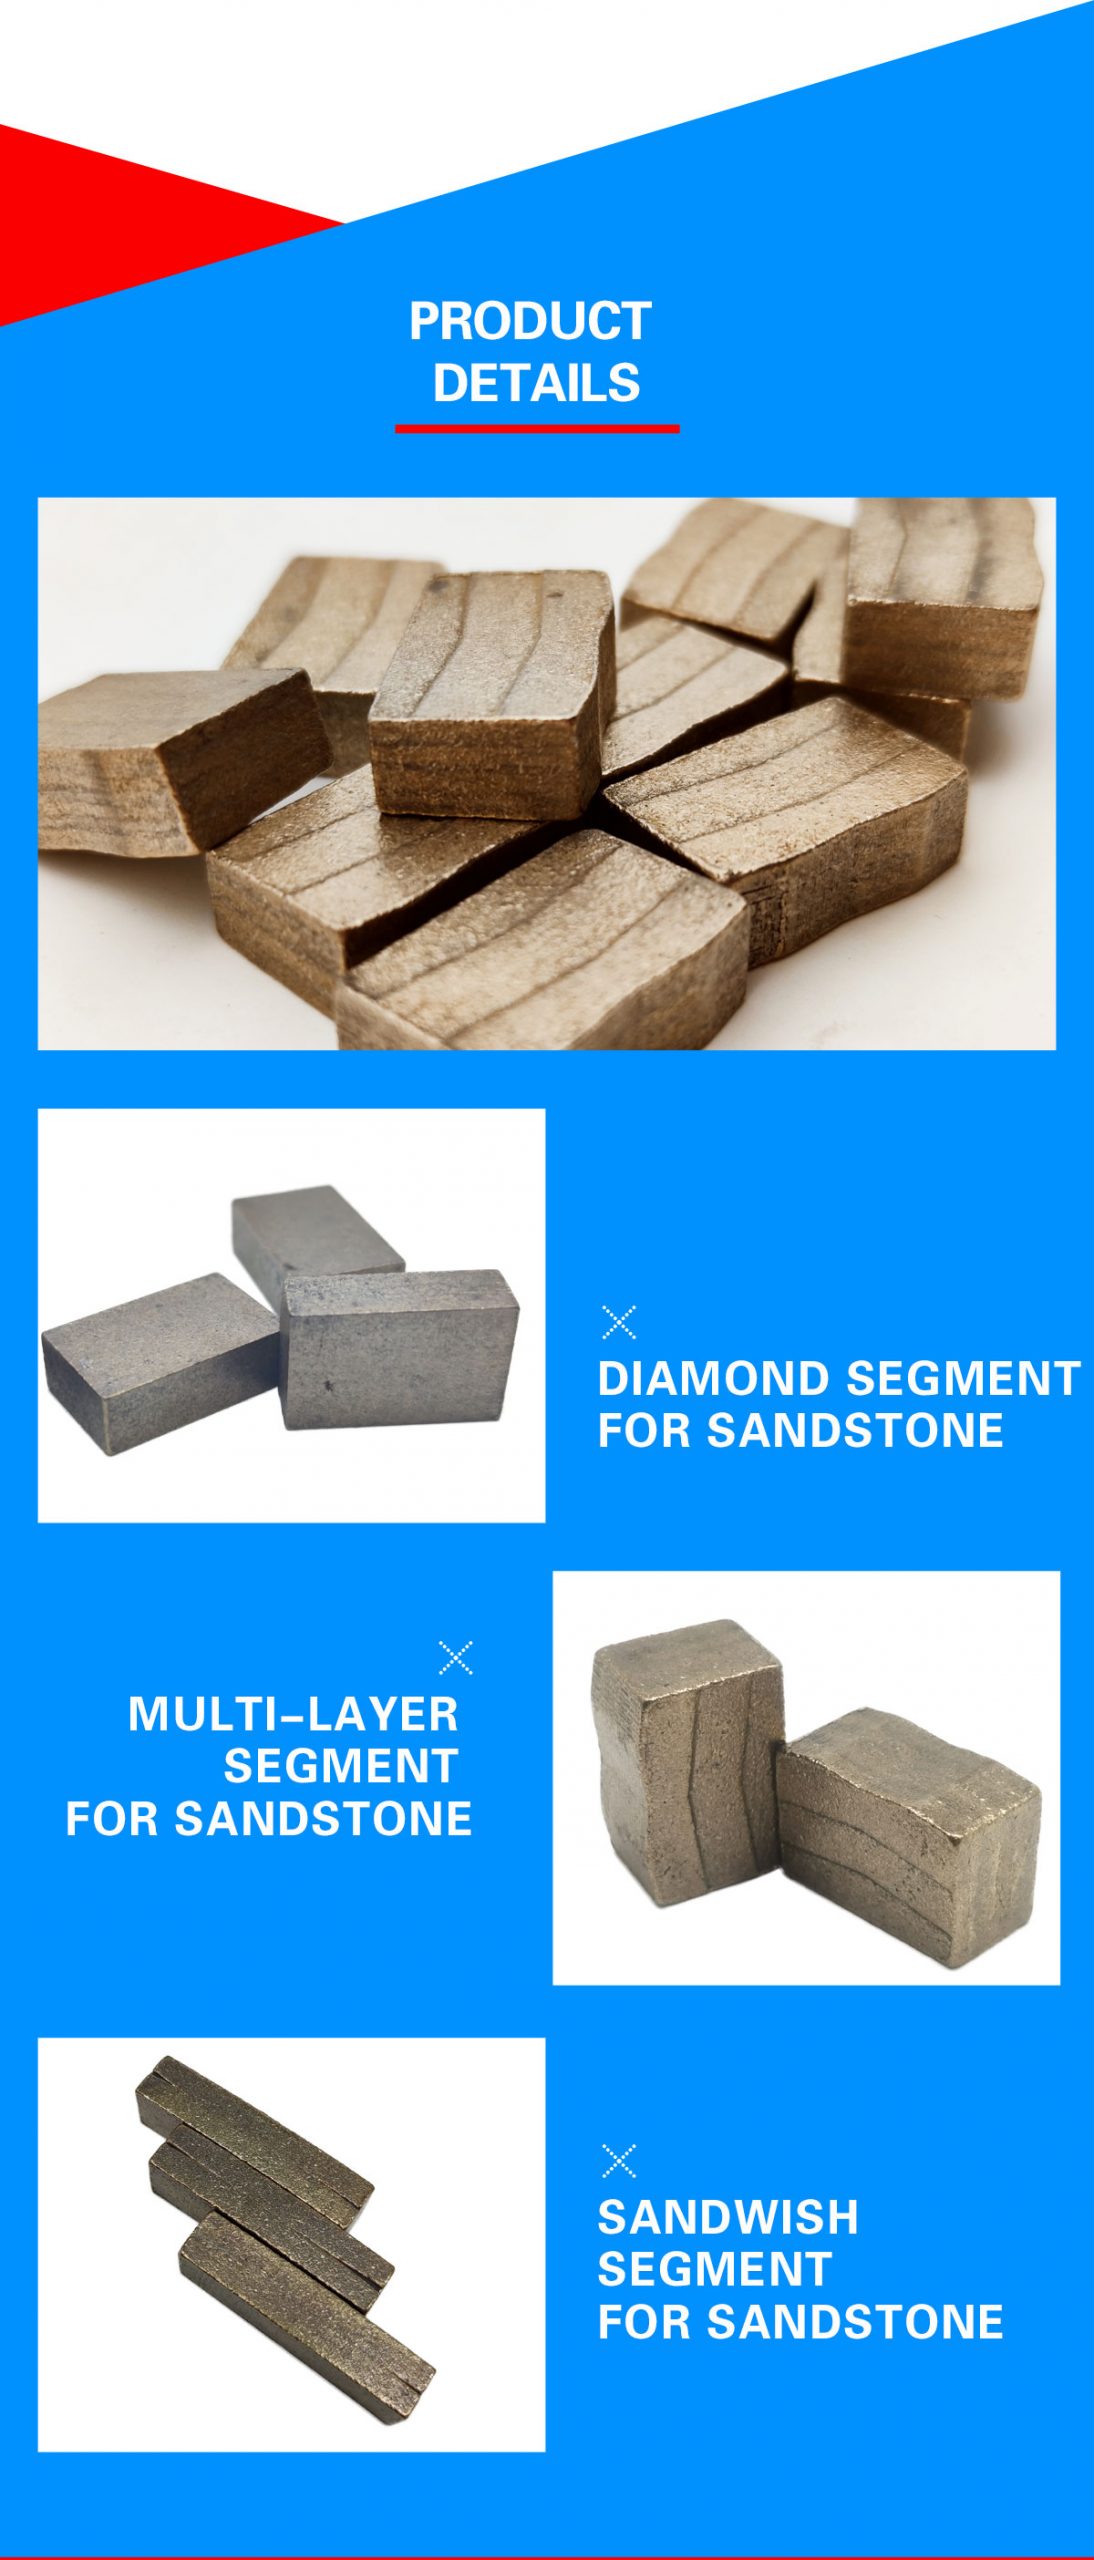 Diamond segments for sandstone